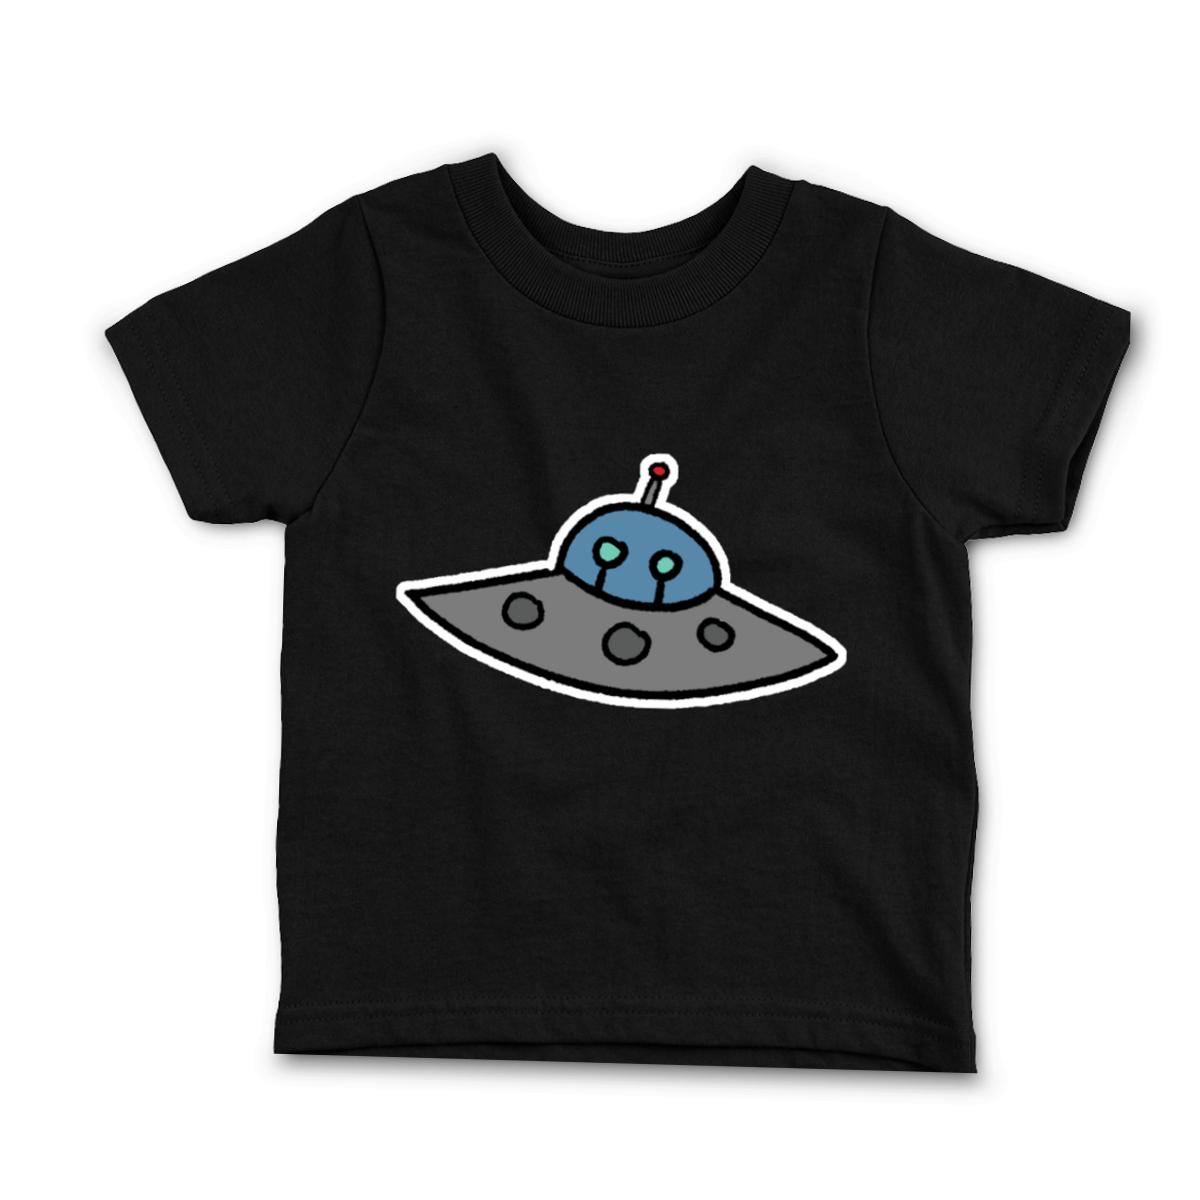 Flying Saucer Toddler Tee 2T black